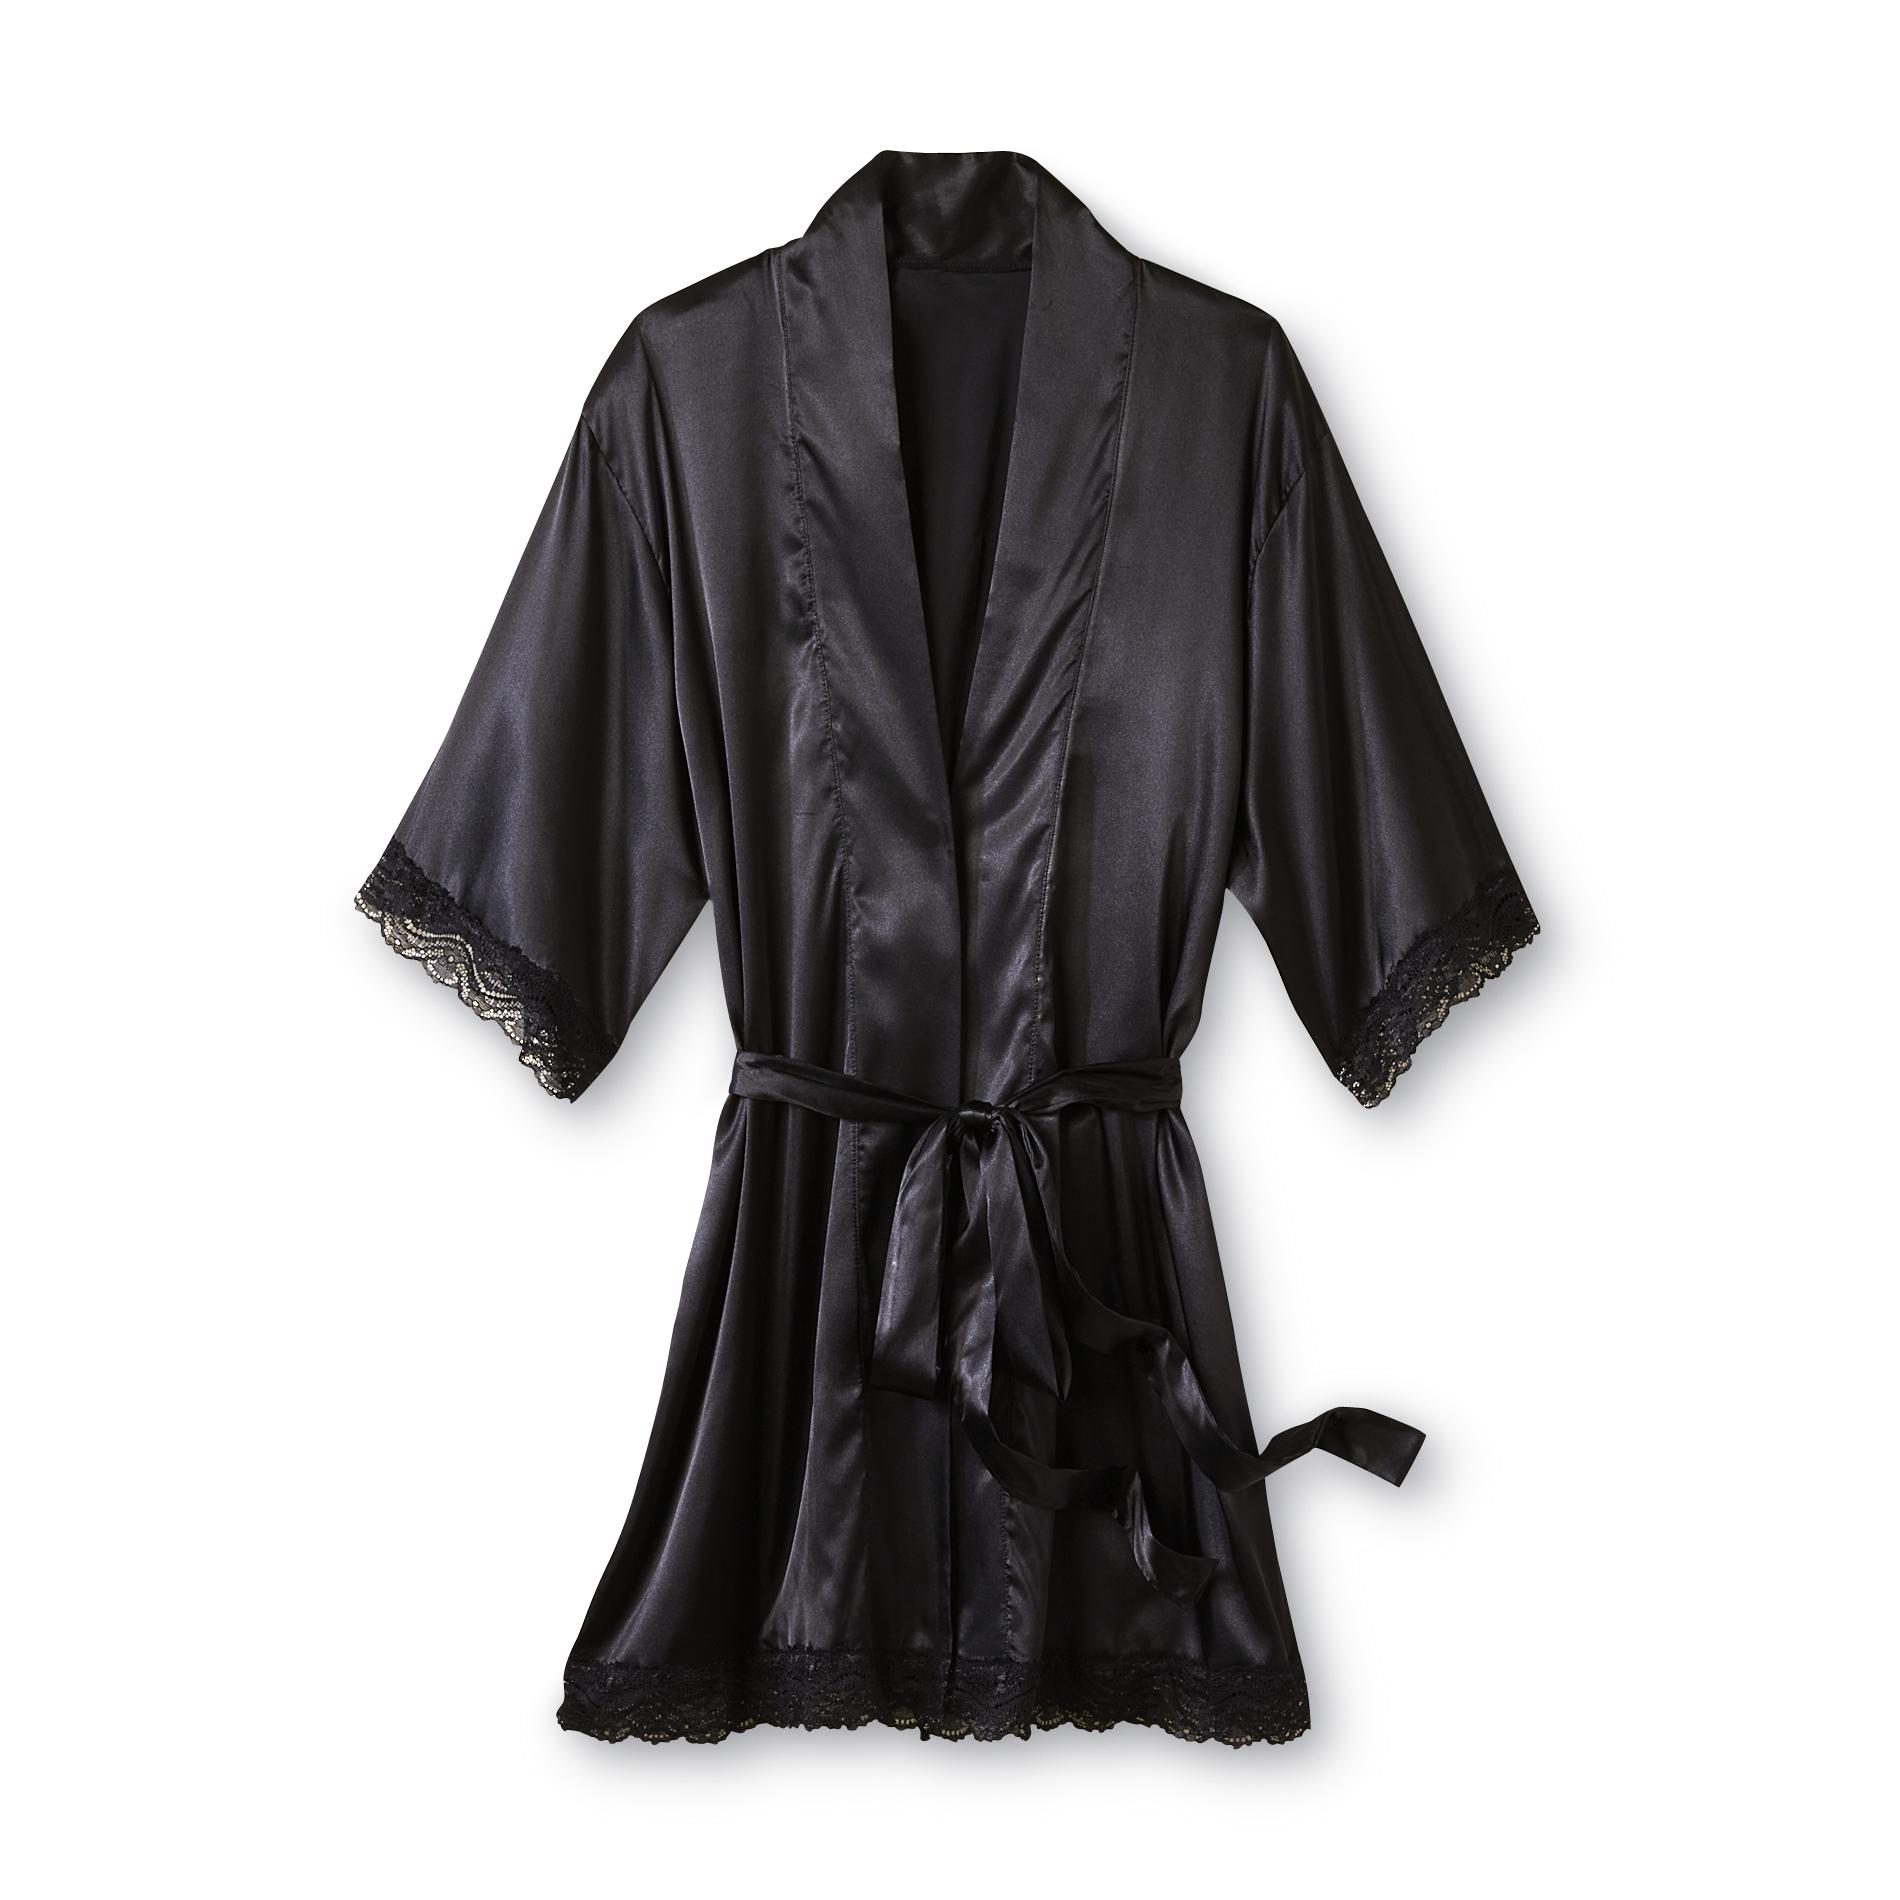 Metaphor Women's Lace-Trim Satin Kimono Robe - Belted